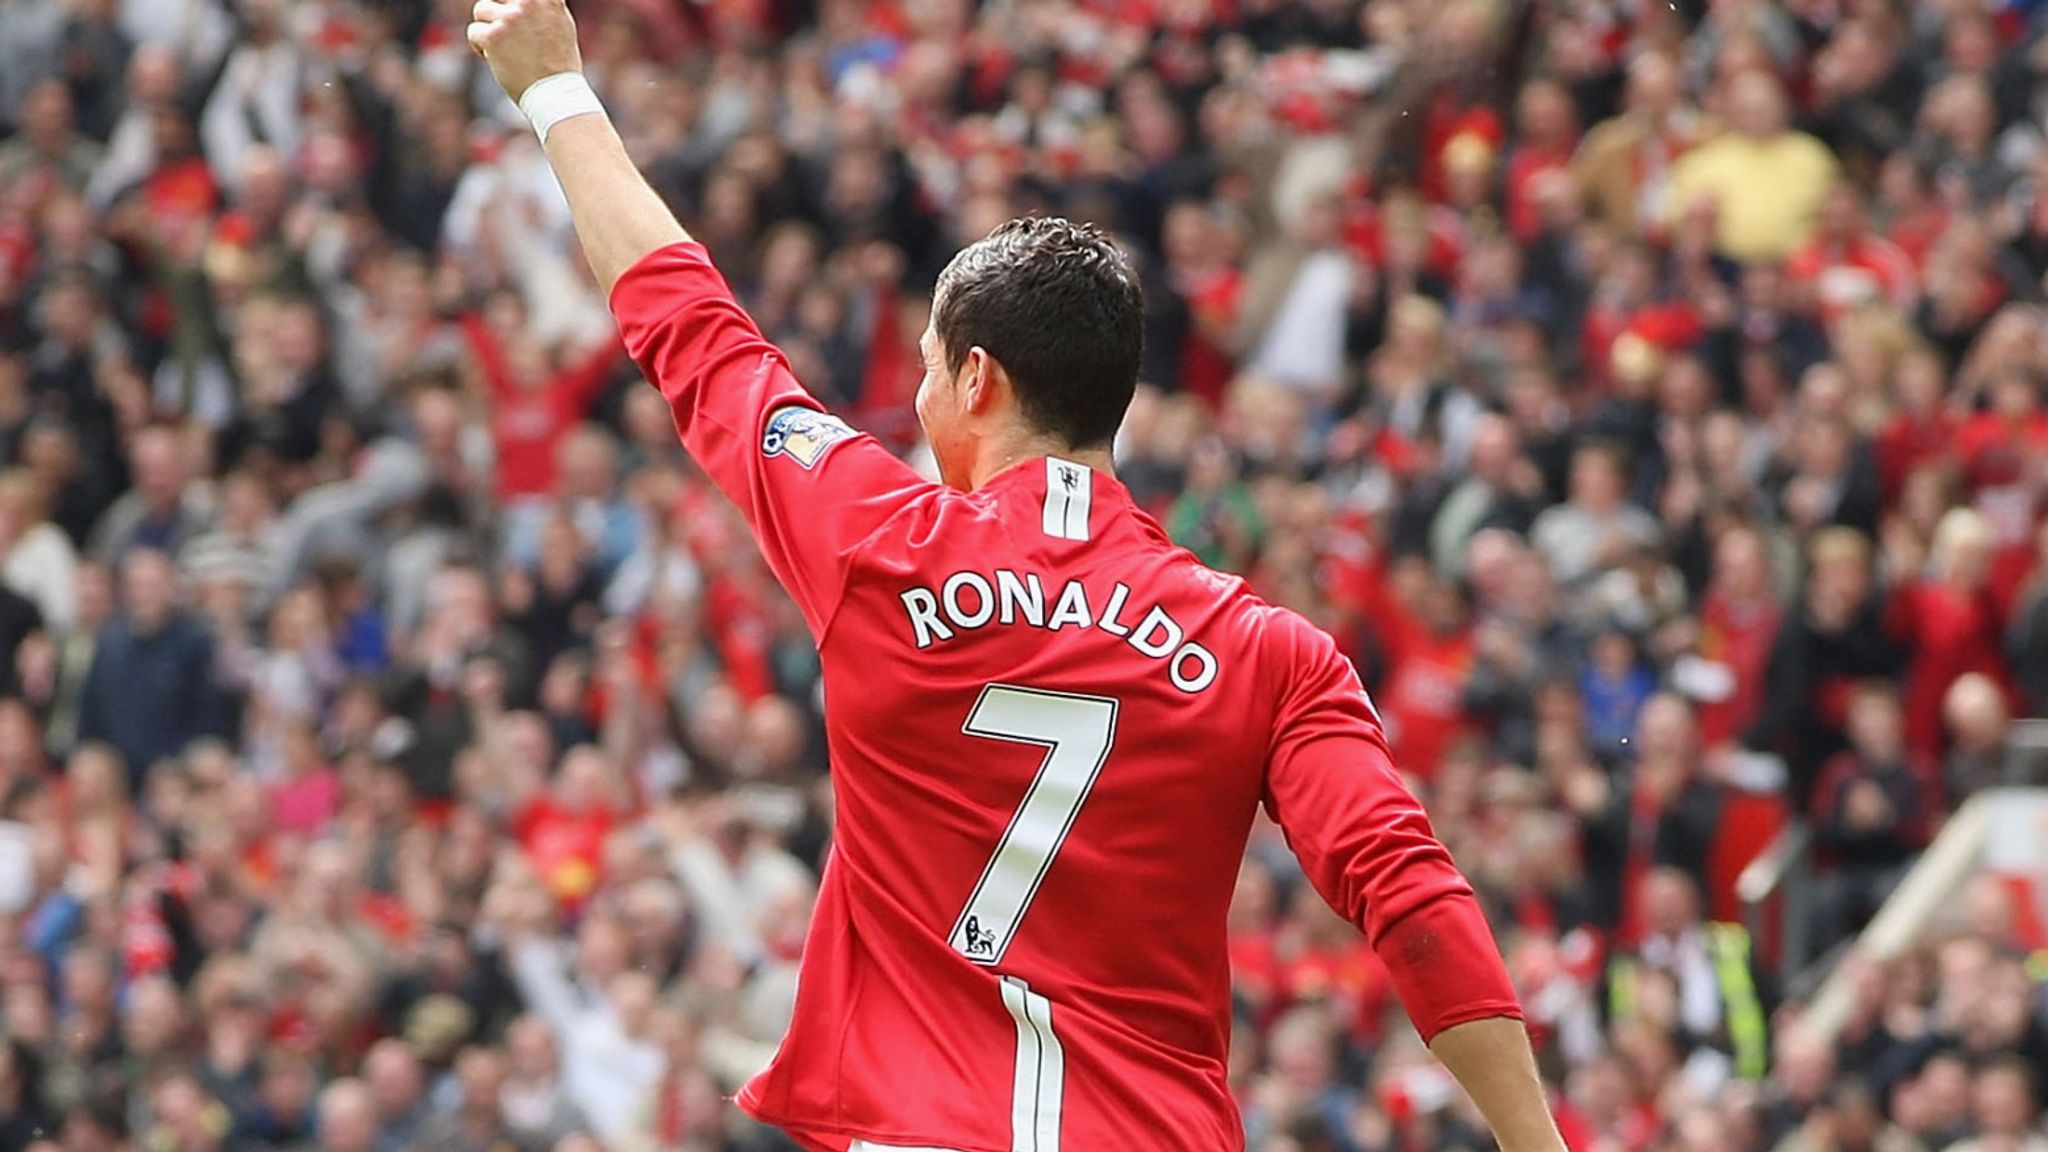 Cristiano Ronaldo: Manchester United signing to wear No 7 shirt again for club as Edinson Cavani takes No 21 shirt